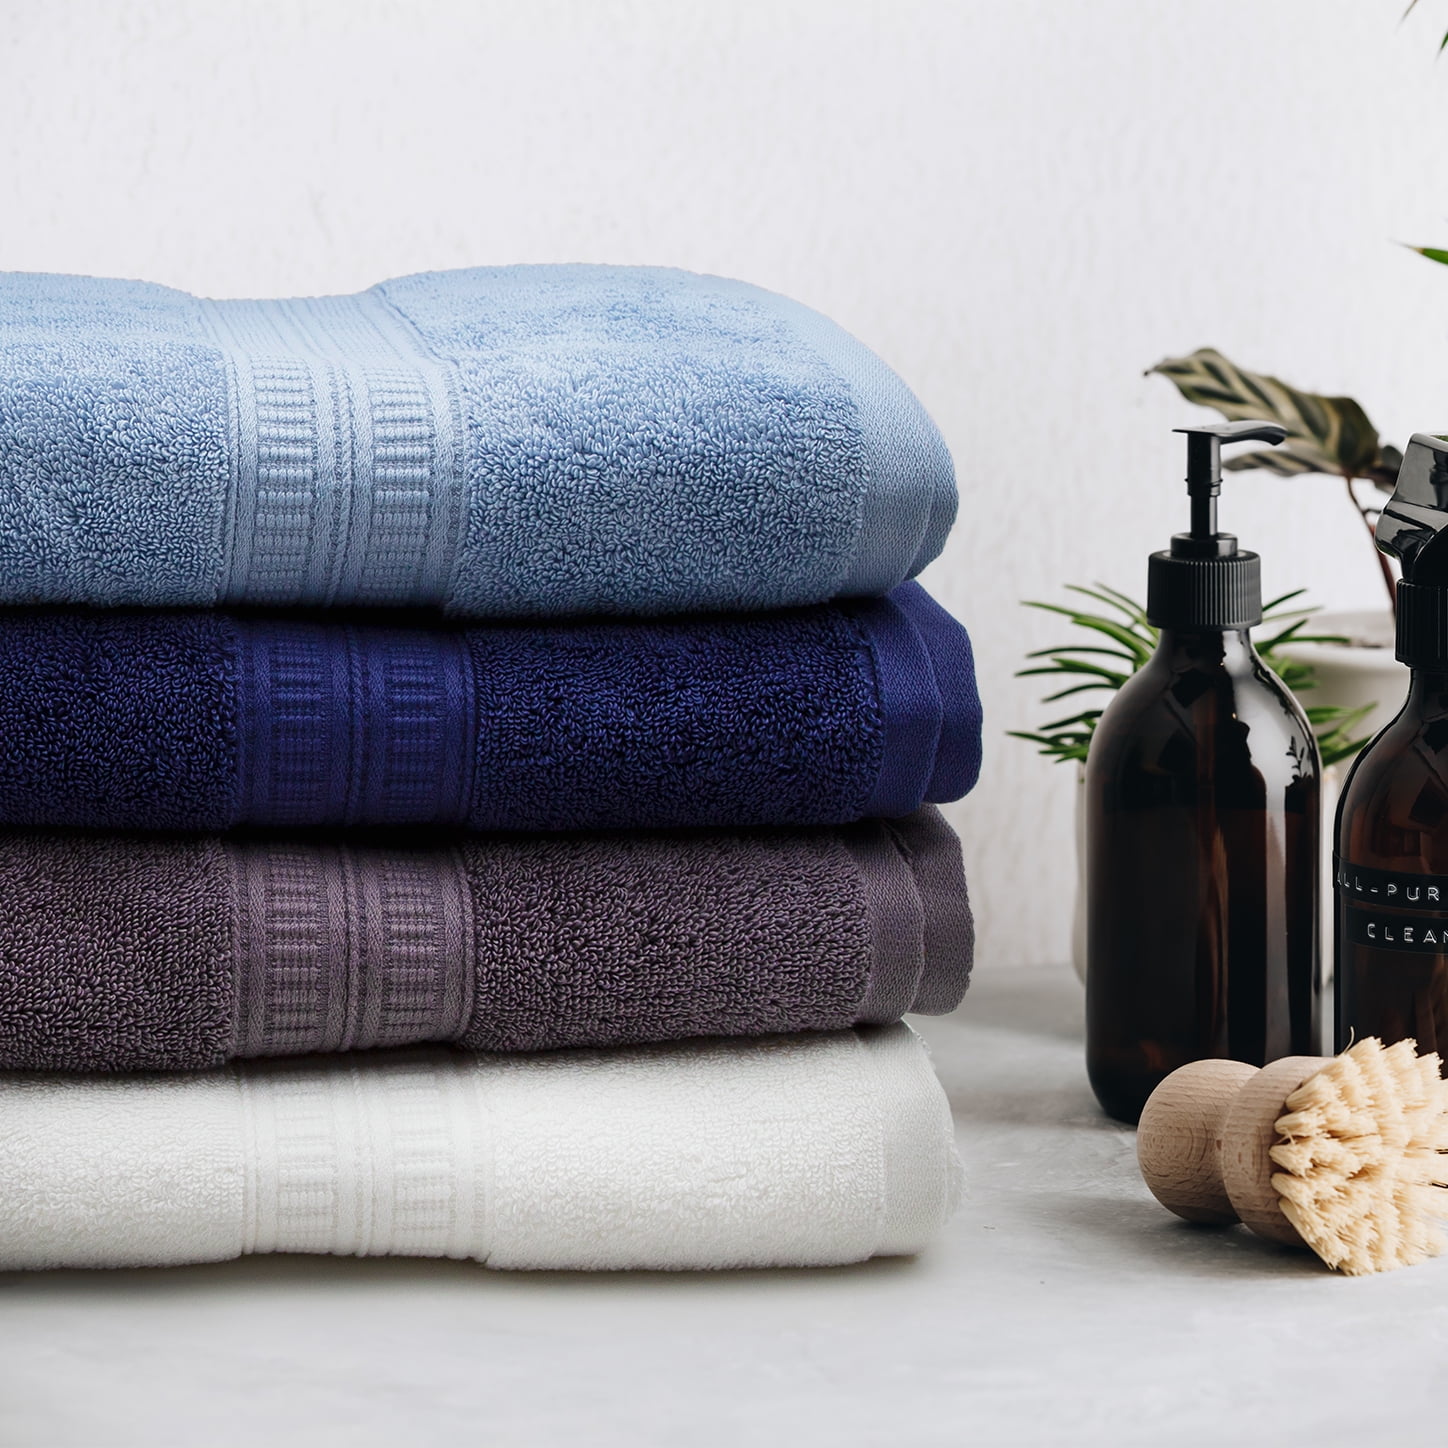 Clean Design Home x Martex 2-Pack Grey Hand Towel Set